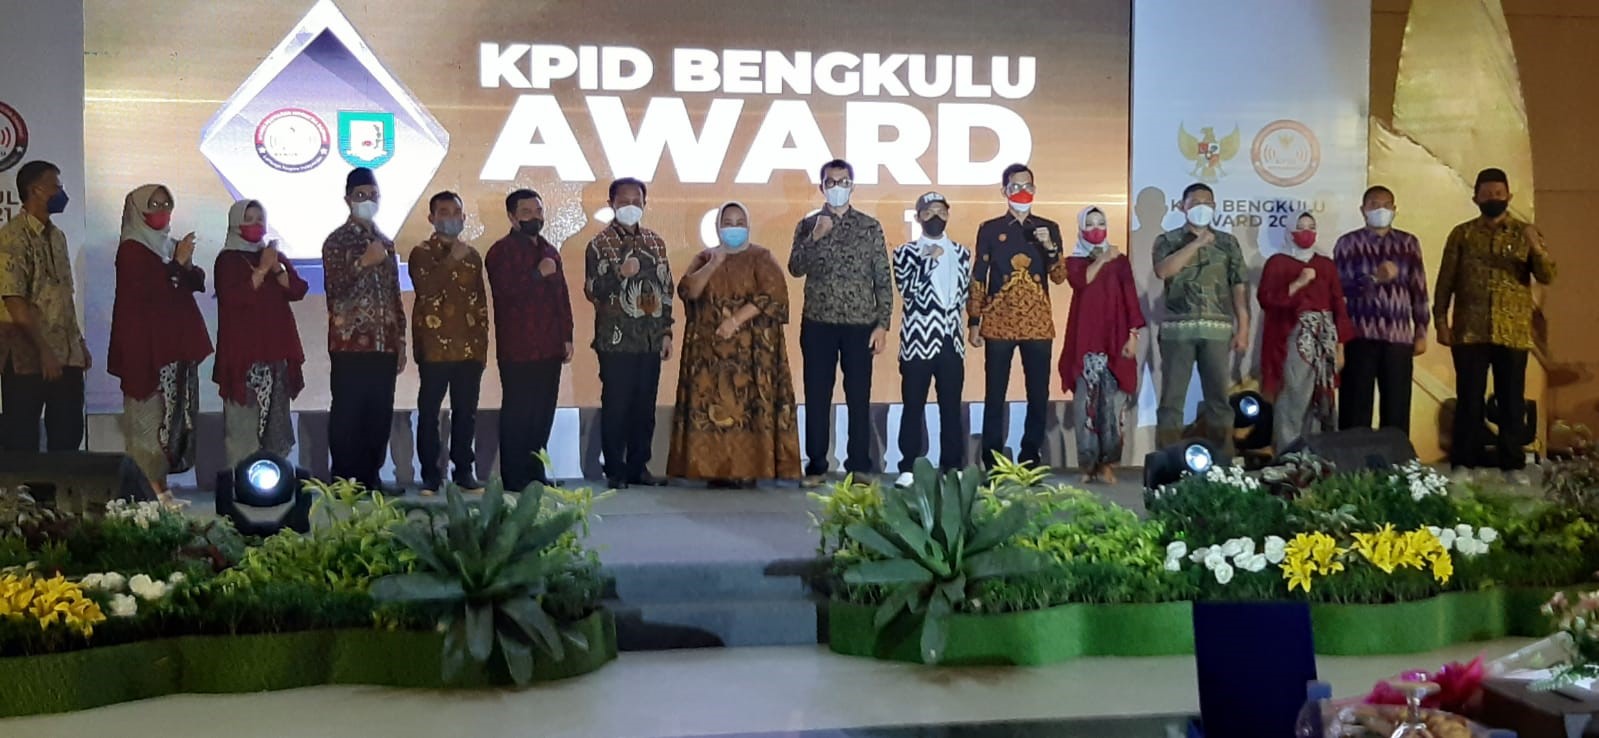 LPP TVRI Stasiun Bengkulu Sabet 3 Penghargaan dalam KPID Awards